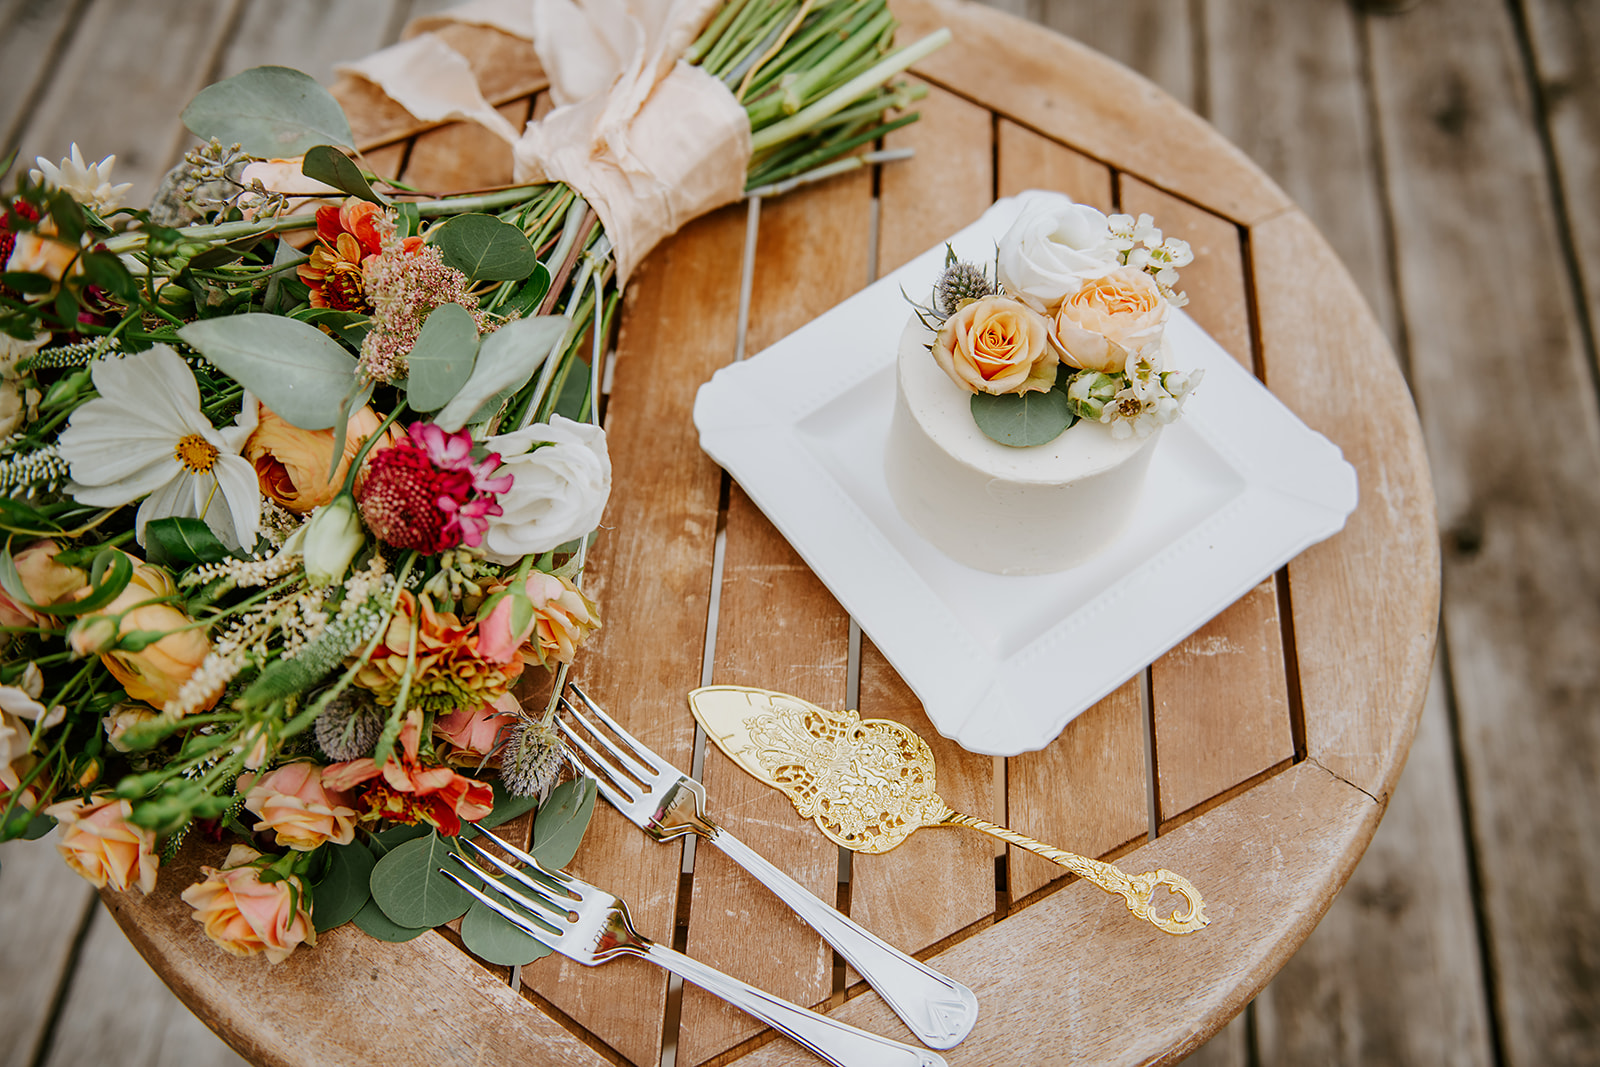 Petite wedding cake and bridal bouquet